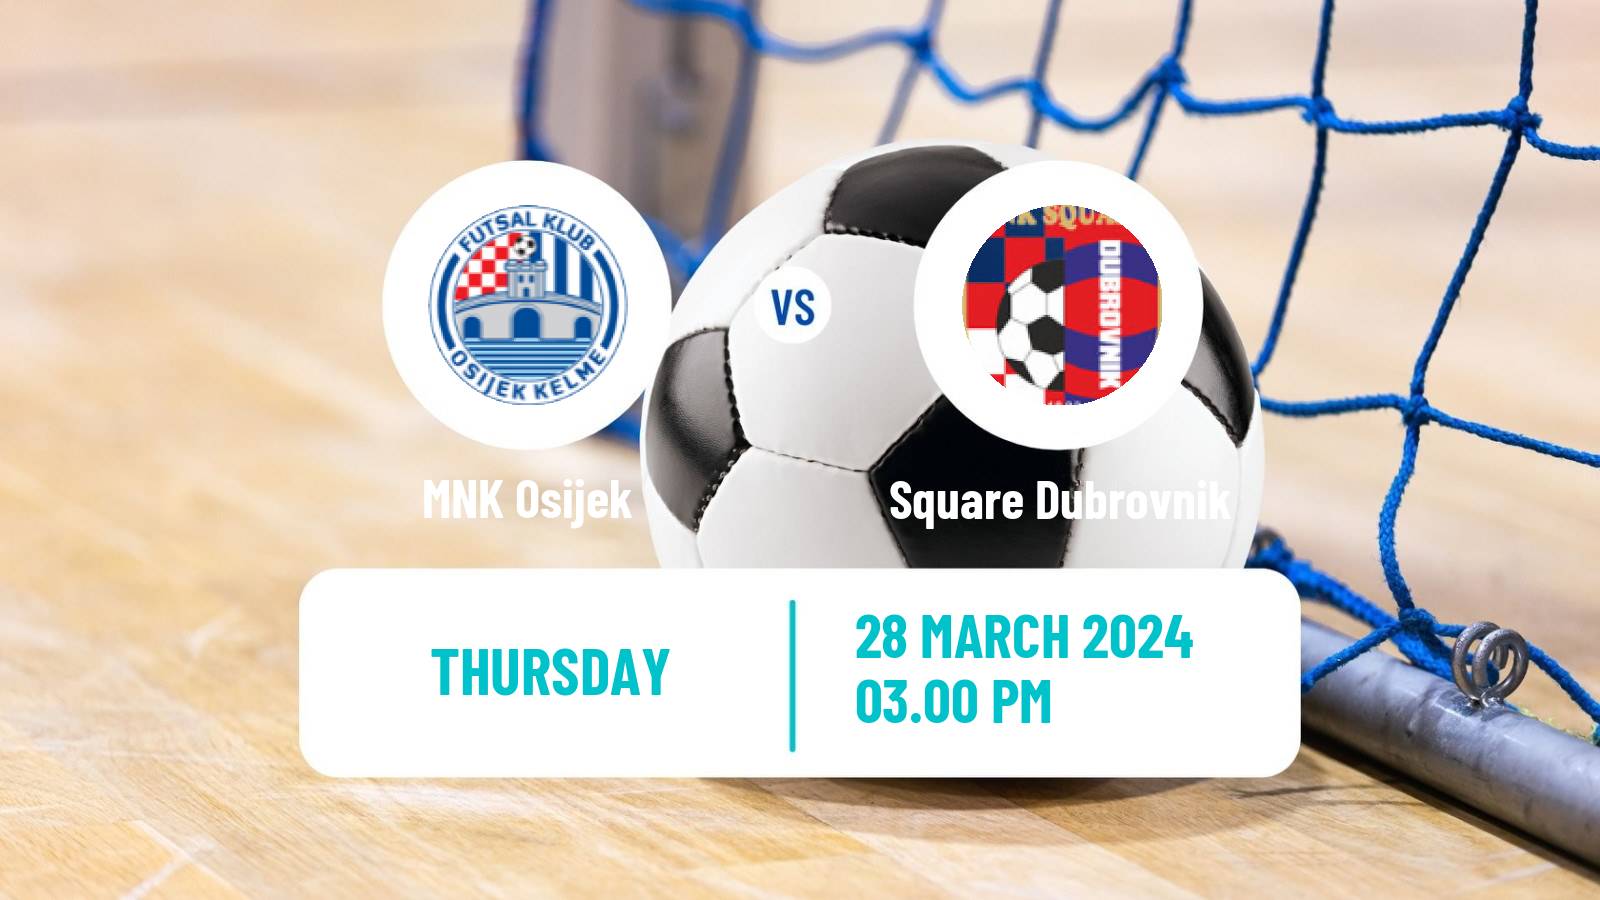 Futsal Croatian 1 HMNL Osijek - Square Dubrovnik